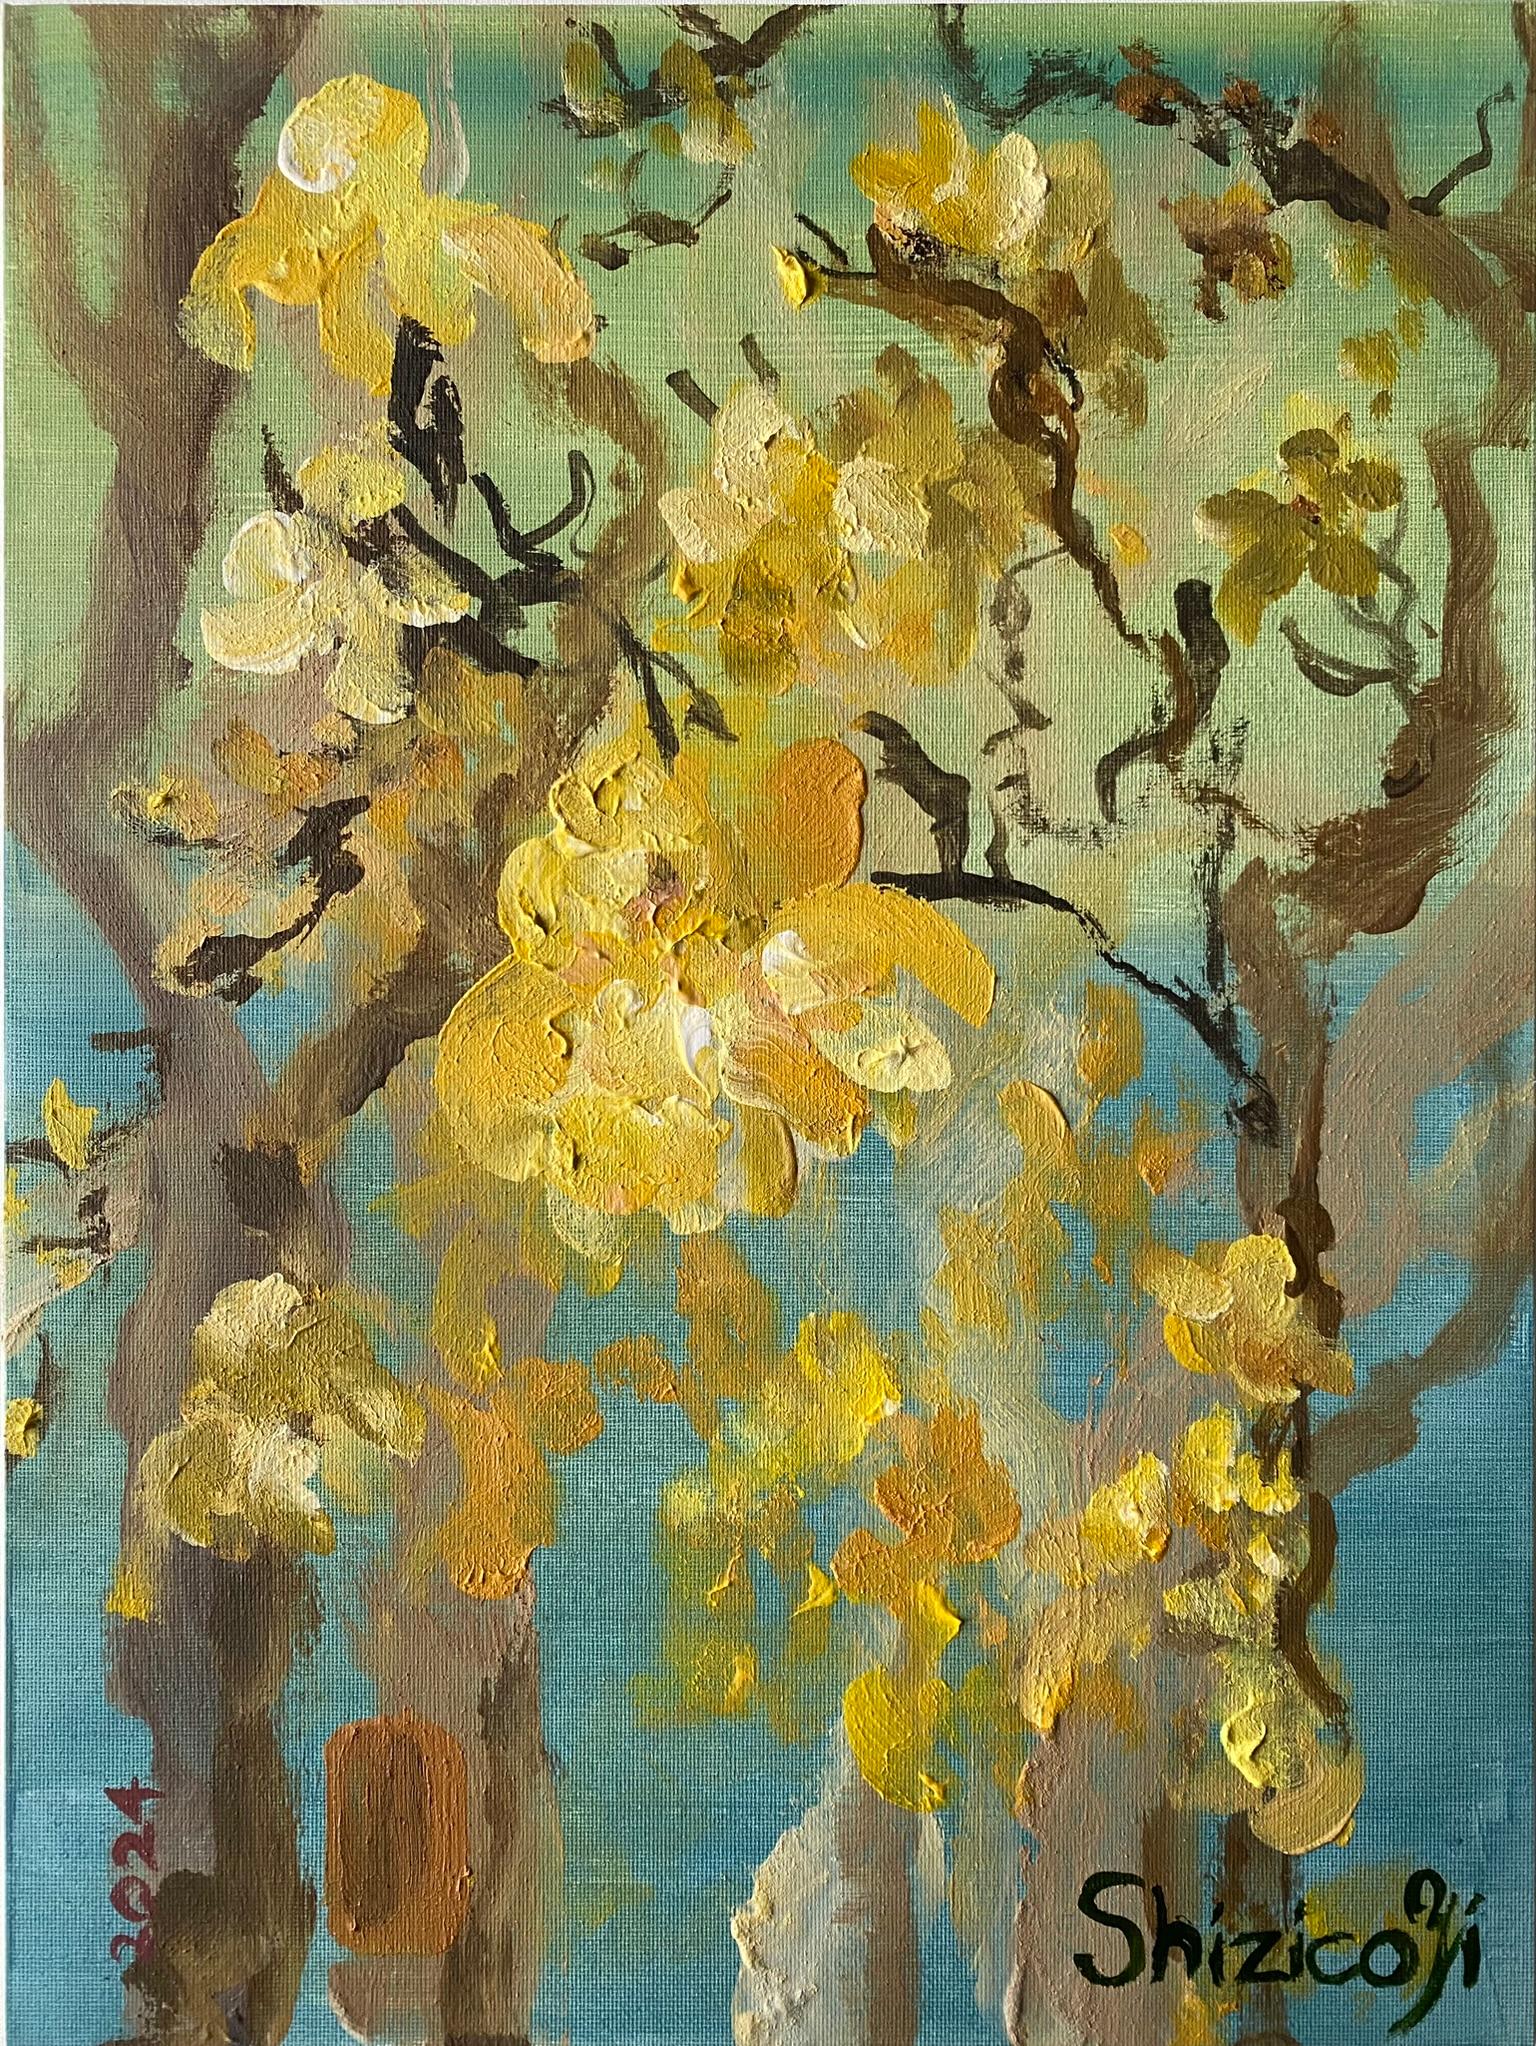 Shizico Yi Landscape Painting - Original-Magnolias-Memory Landscape-UK Awarded Artist-oil on canvas board-Spring